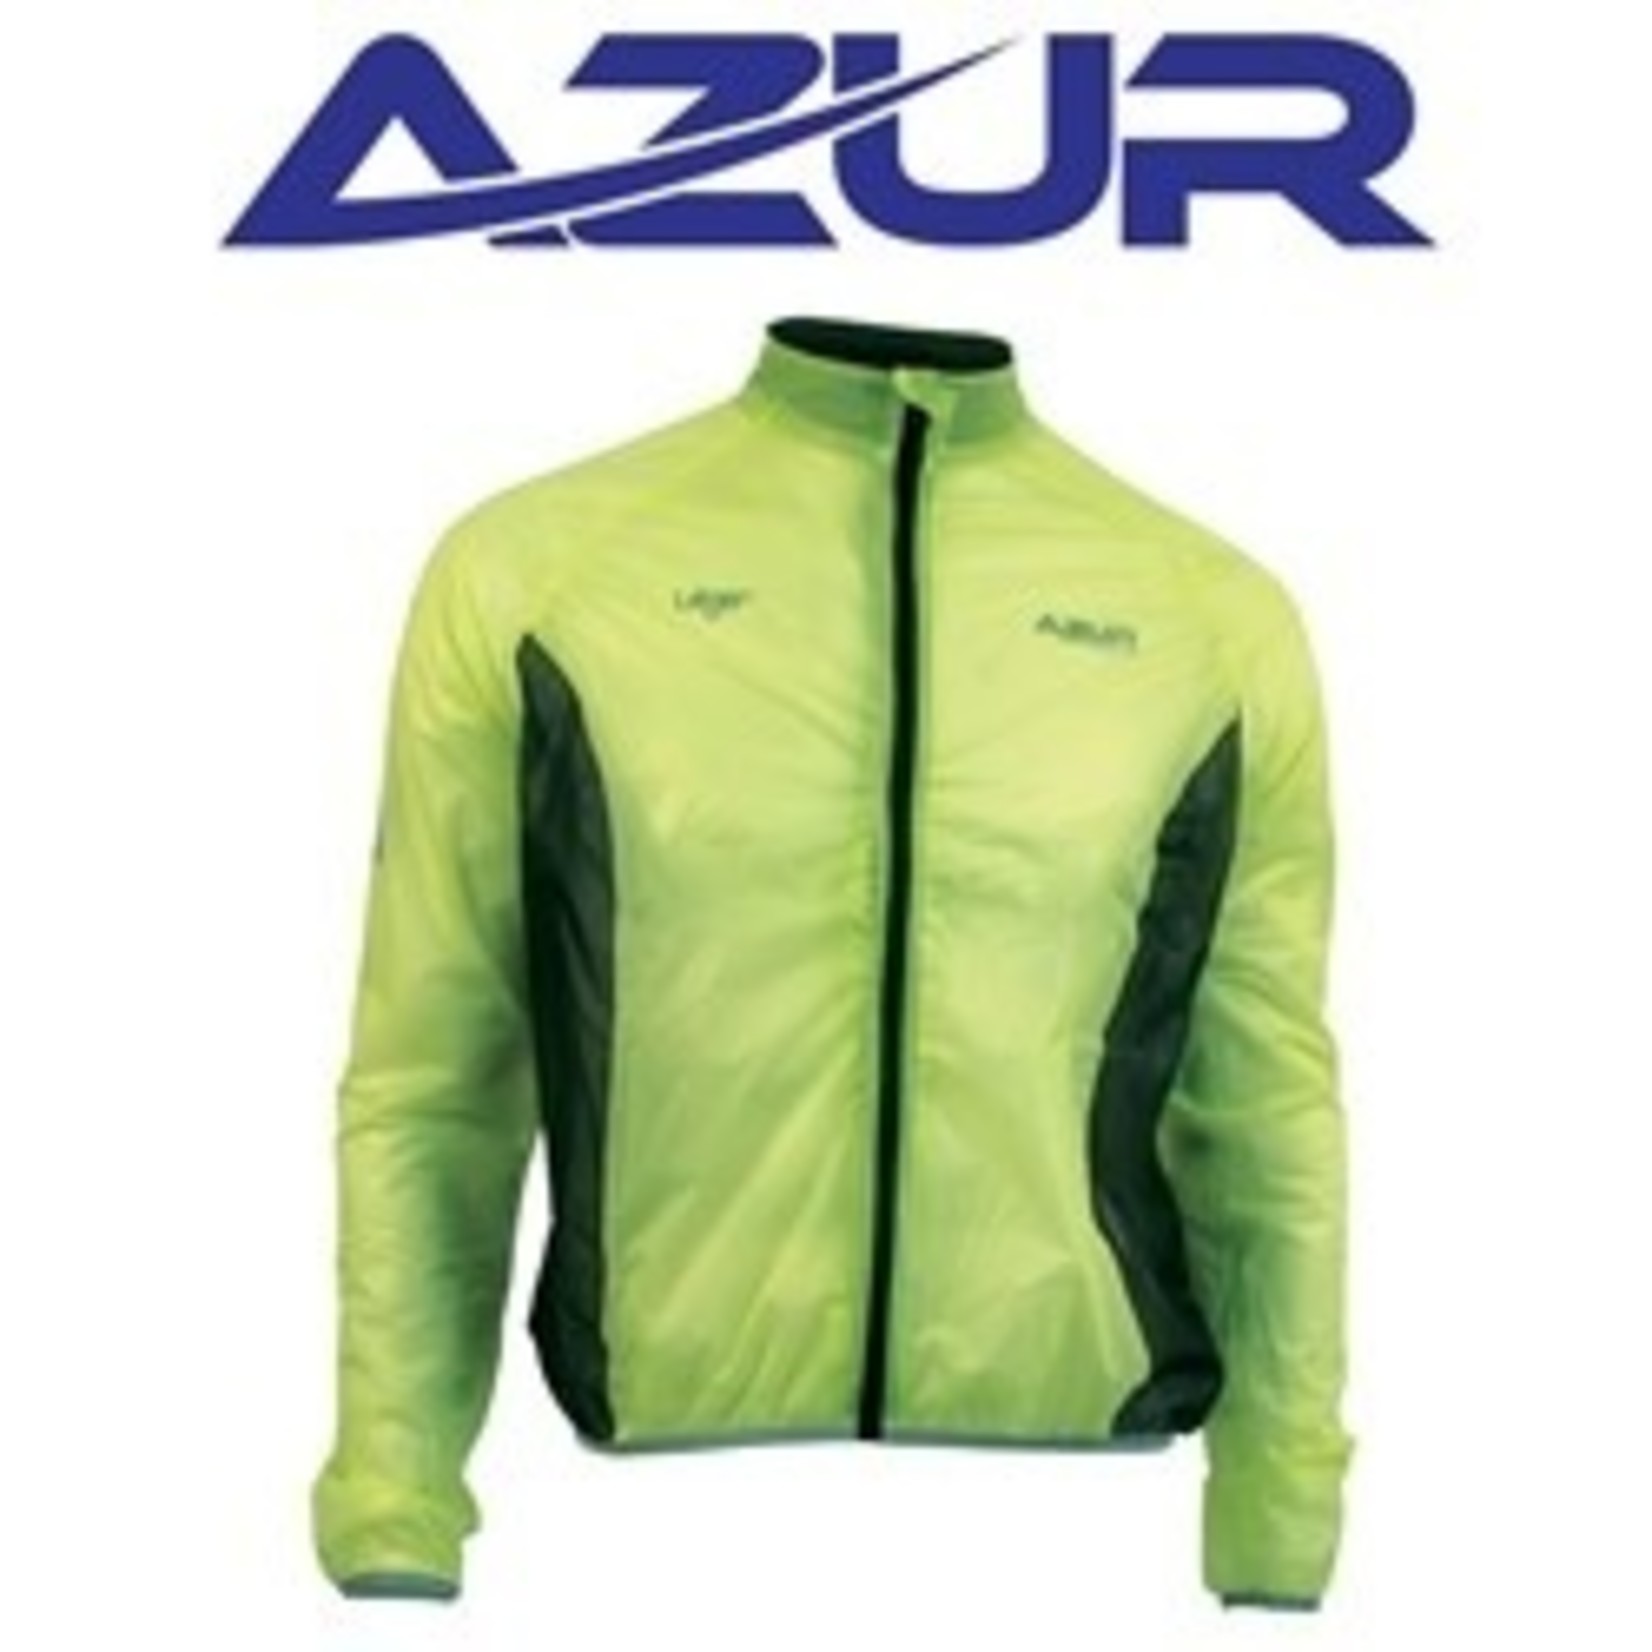 Azur Azur Leger Jacket - "Special"